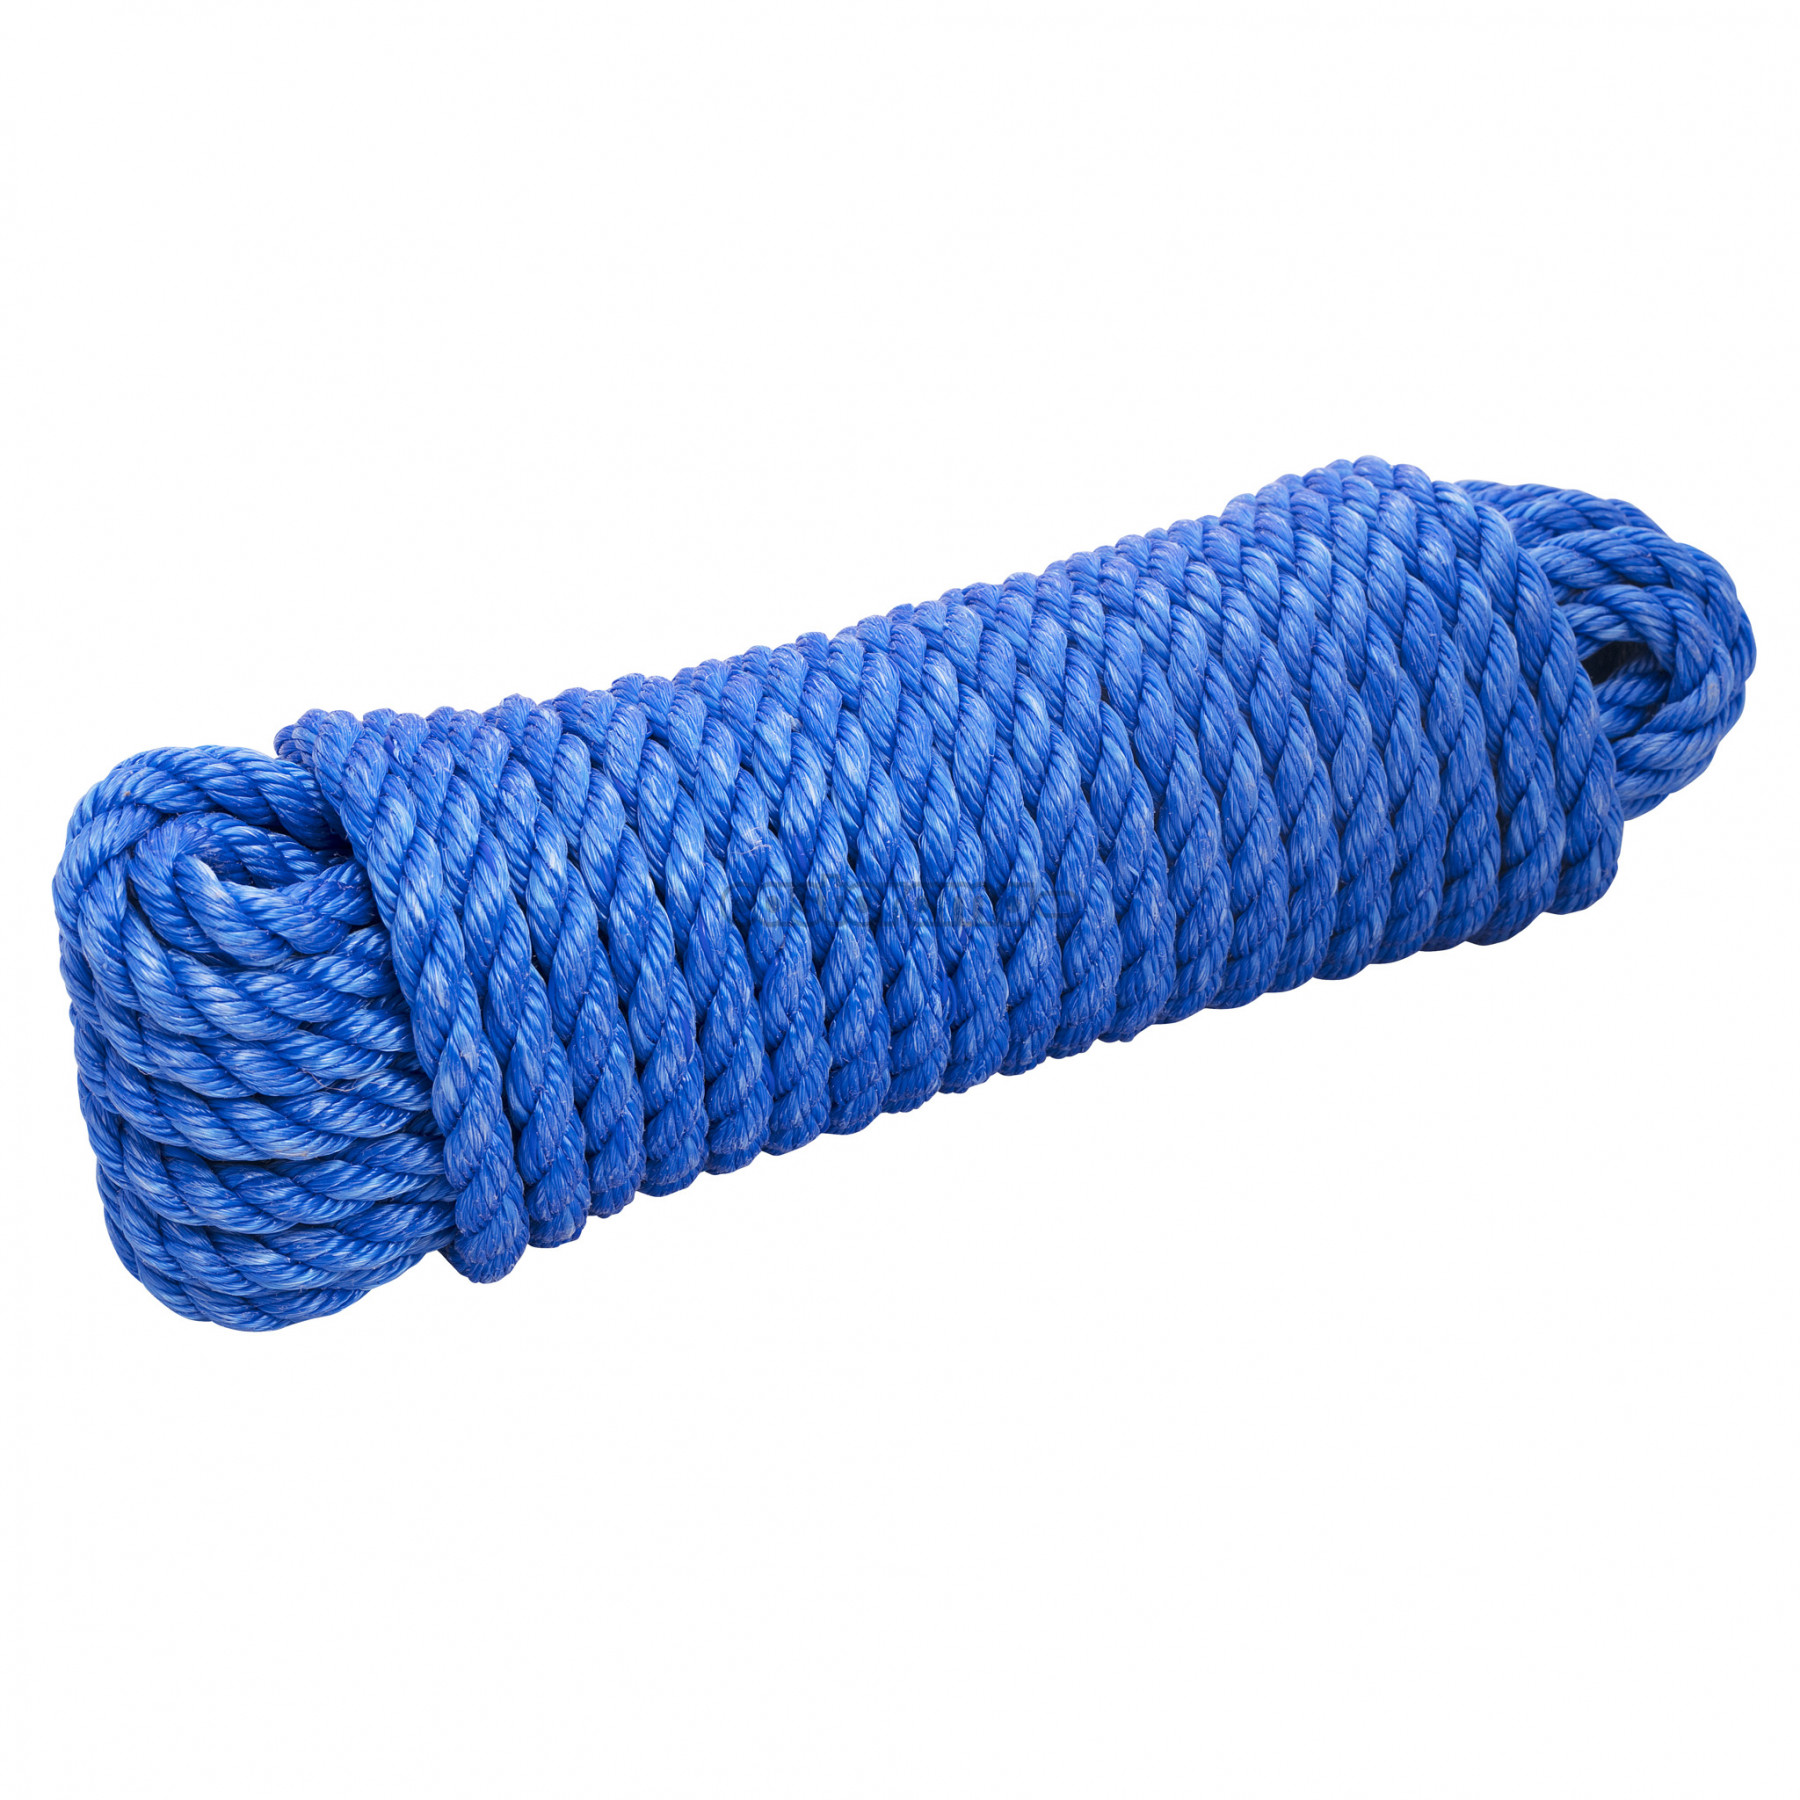 Канат плетёный ЯКОРНЫЙ 12,0 мм, синий, 1800 кг, 45 м